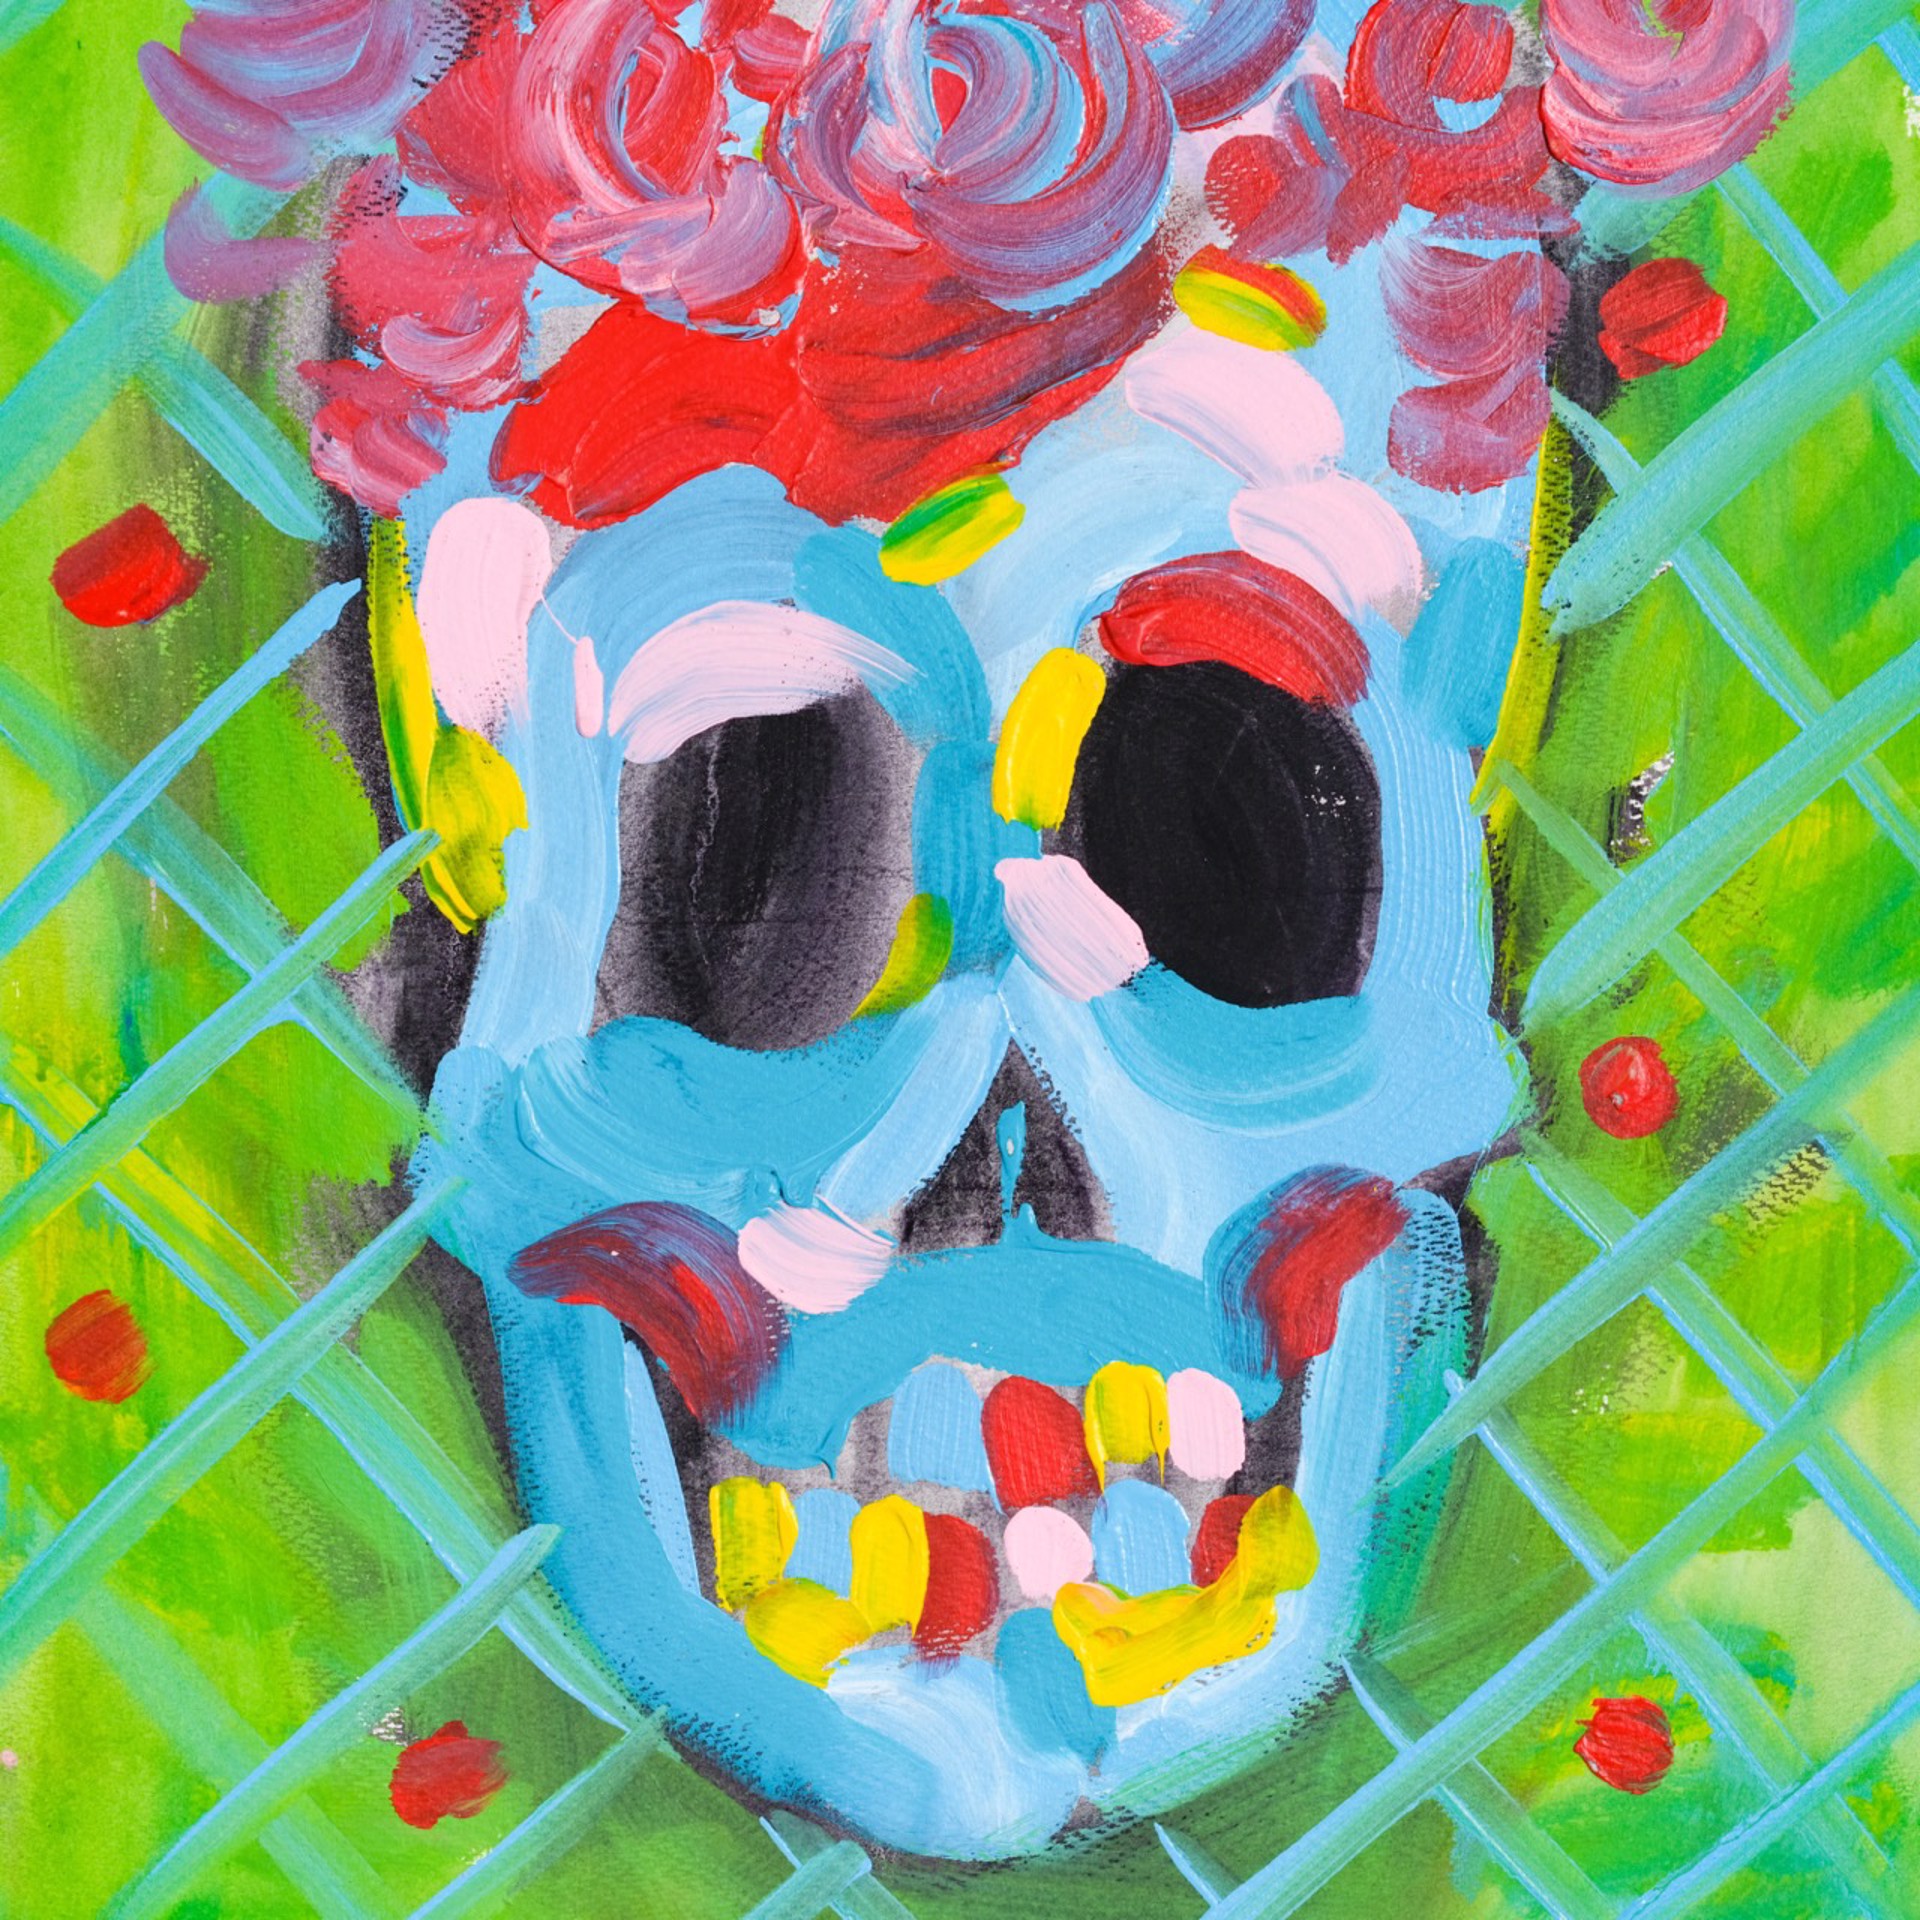 Skull & flowers by Bradley Theodore